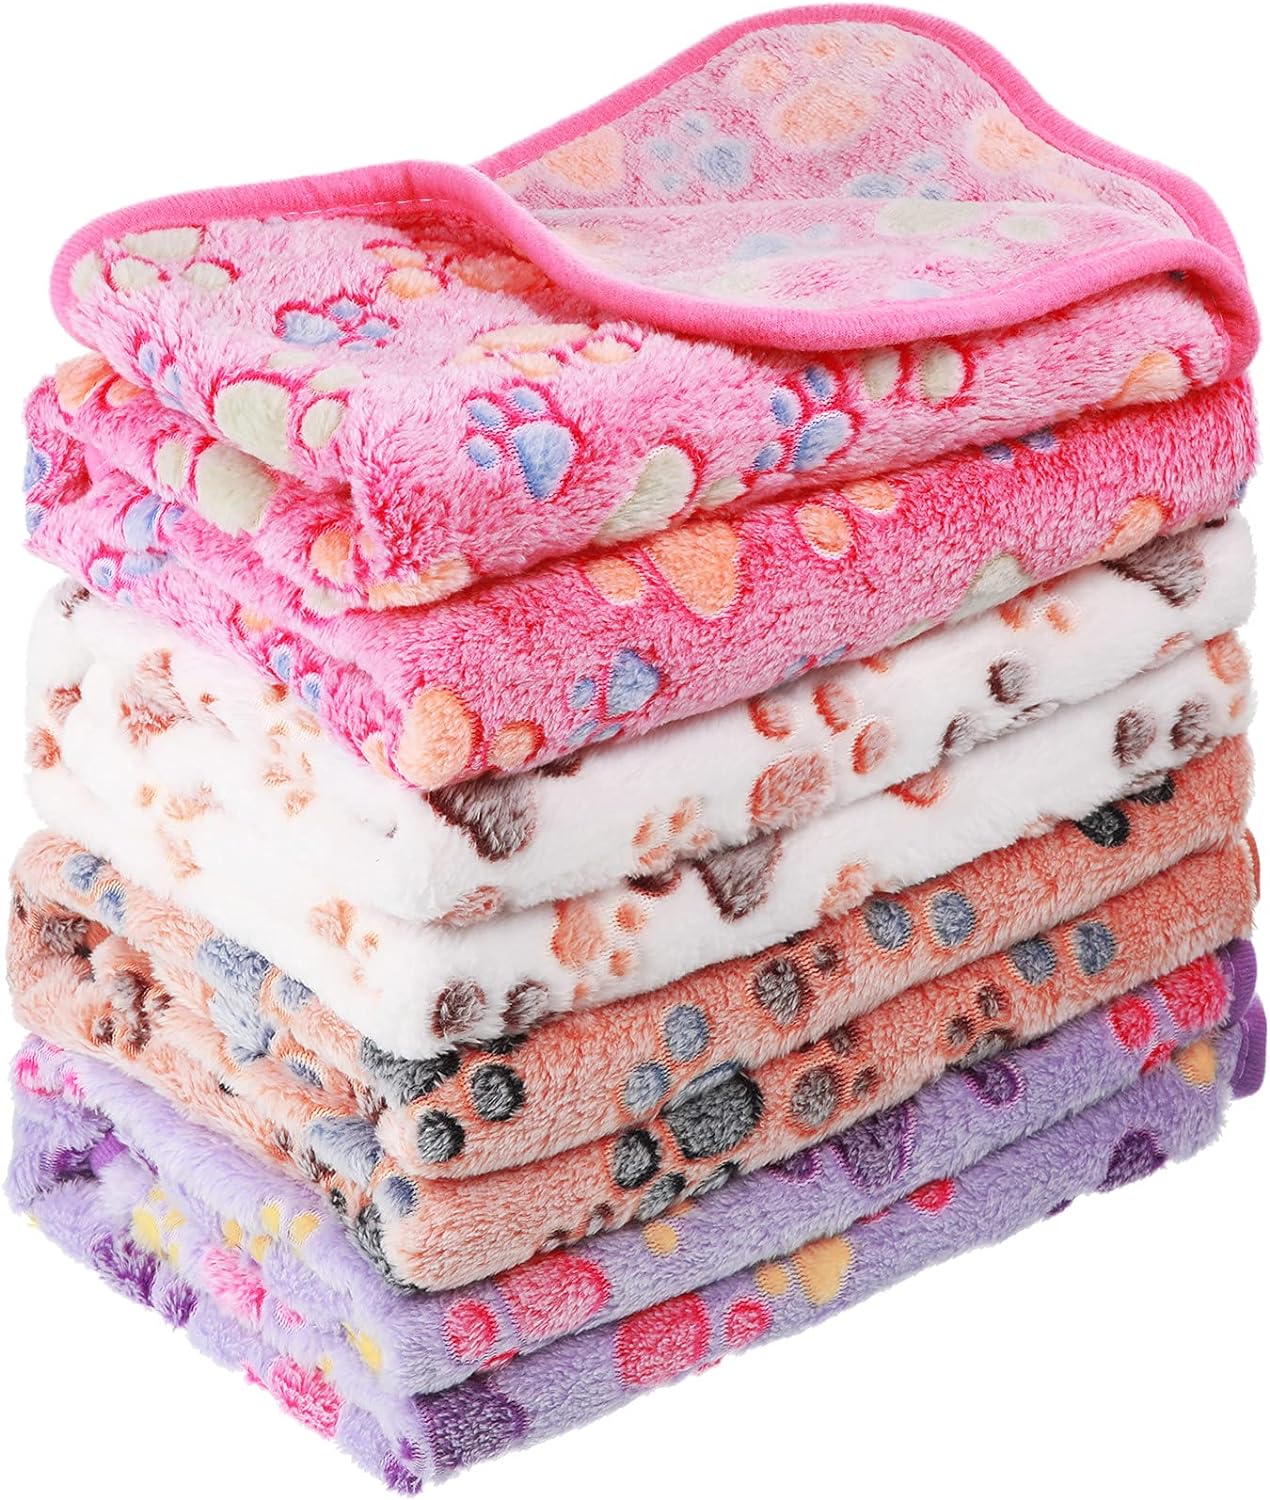 Mutli-colored paw print blankets